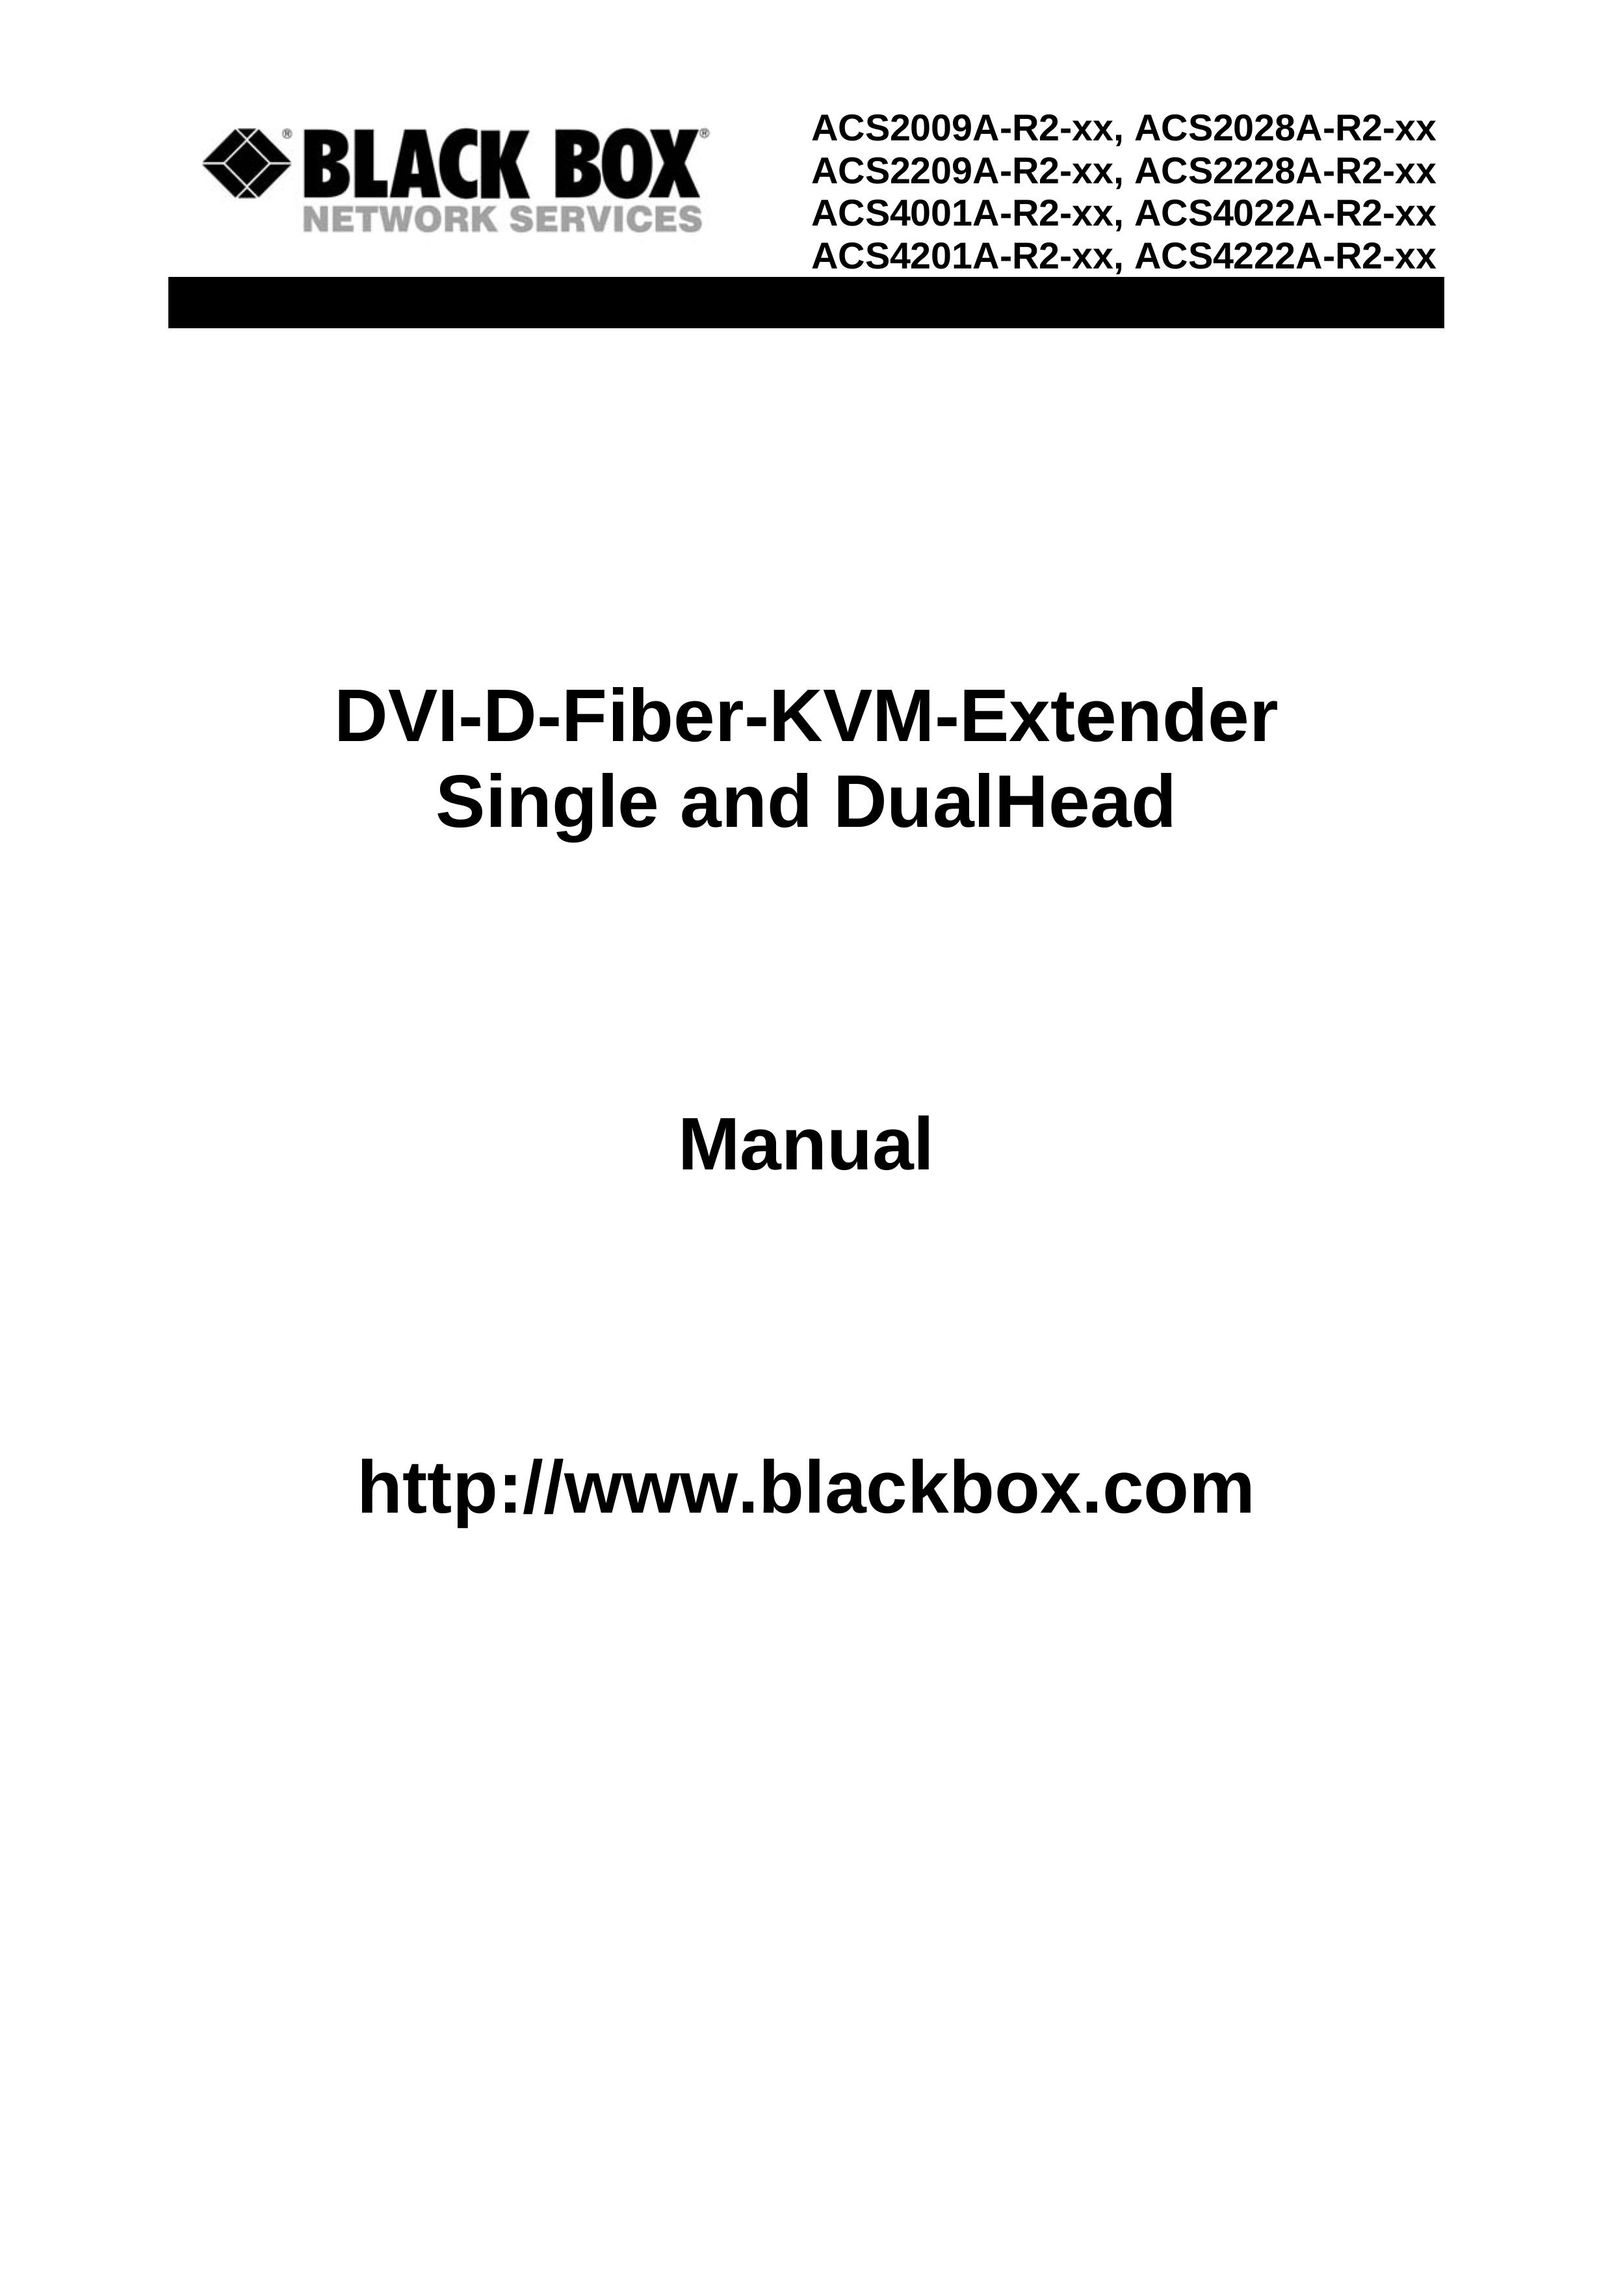 Black Box ACS2228A-R2-xx ACS4001A-R2-xx Network Hardware User Manual